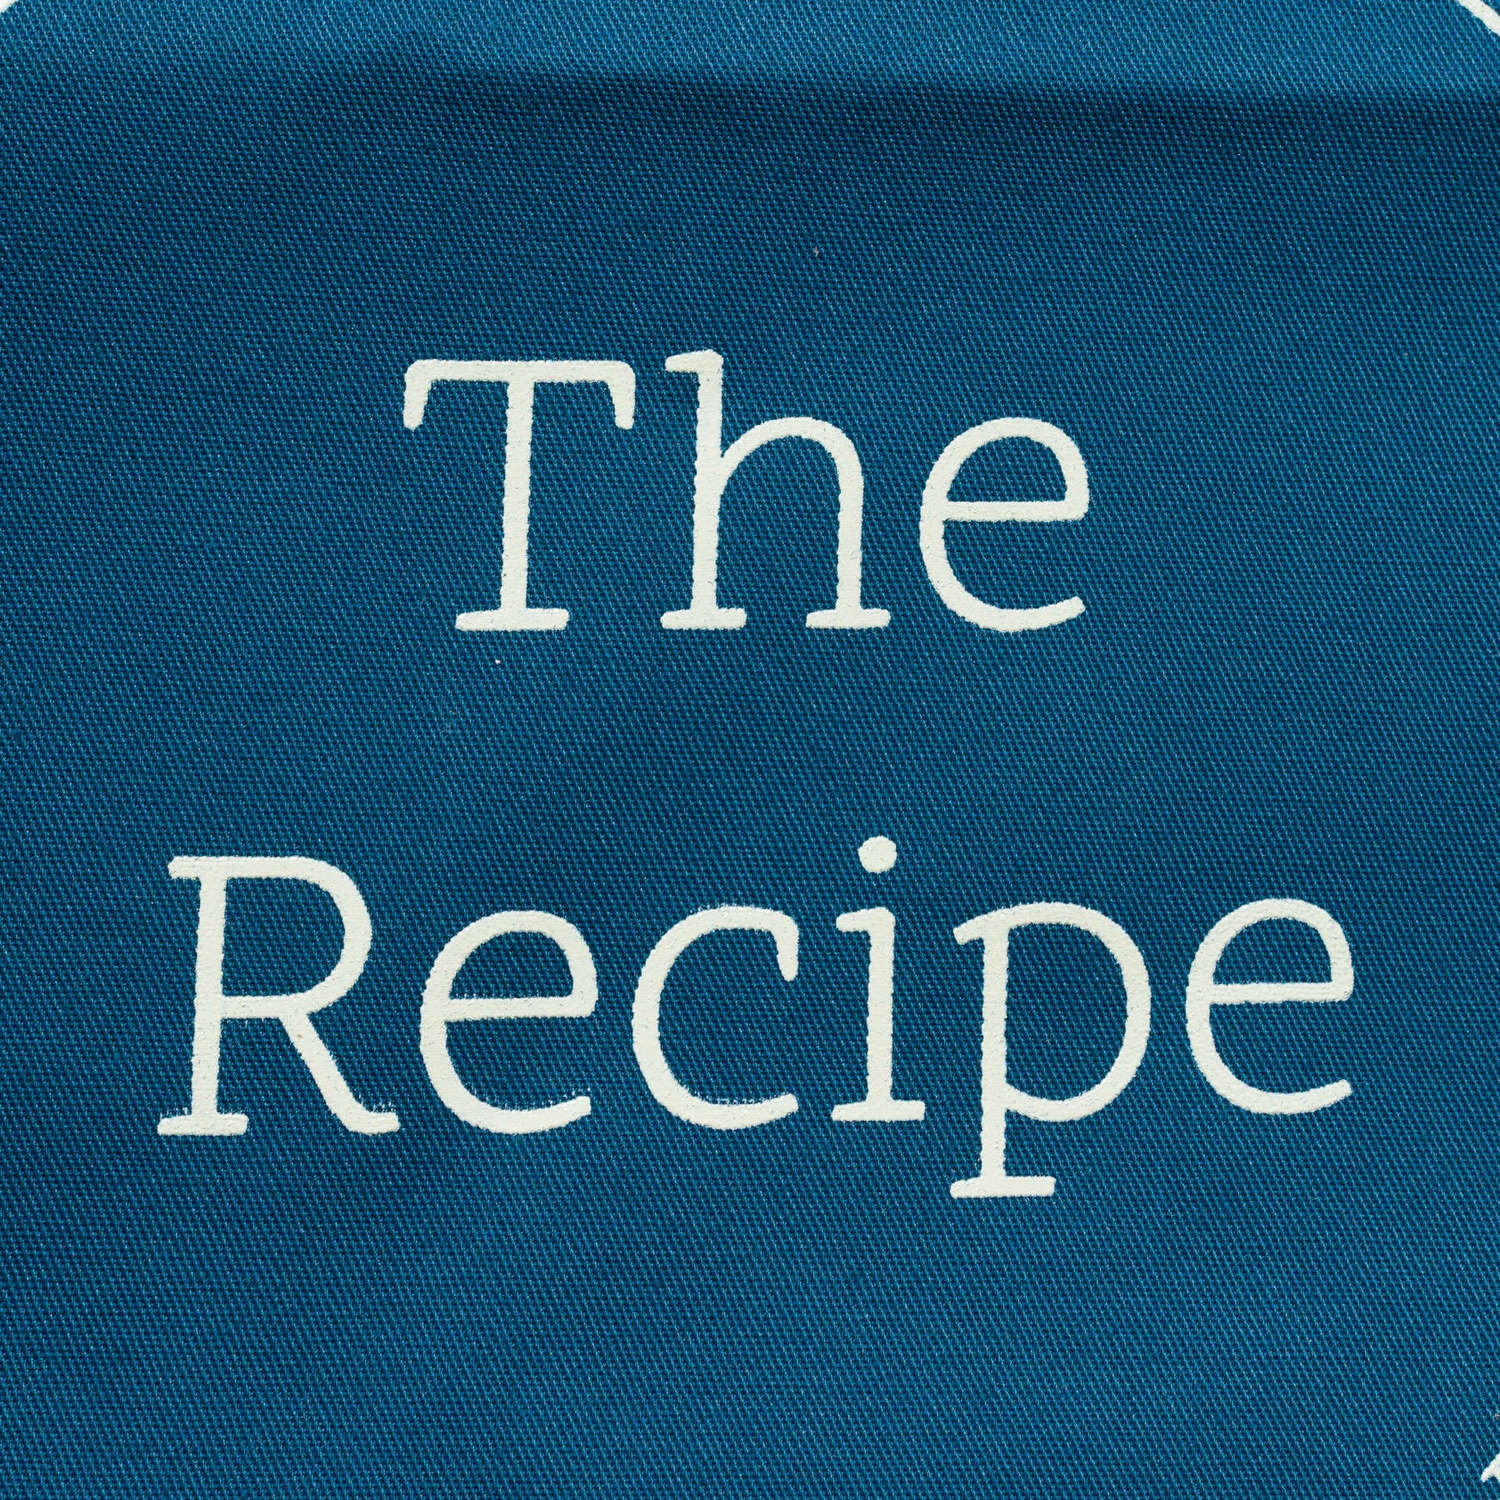 The Recipe Apron - Image 4